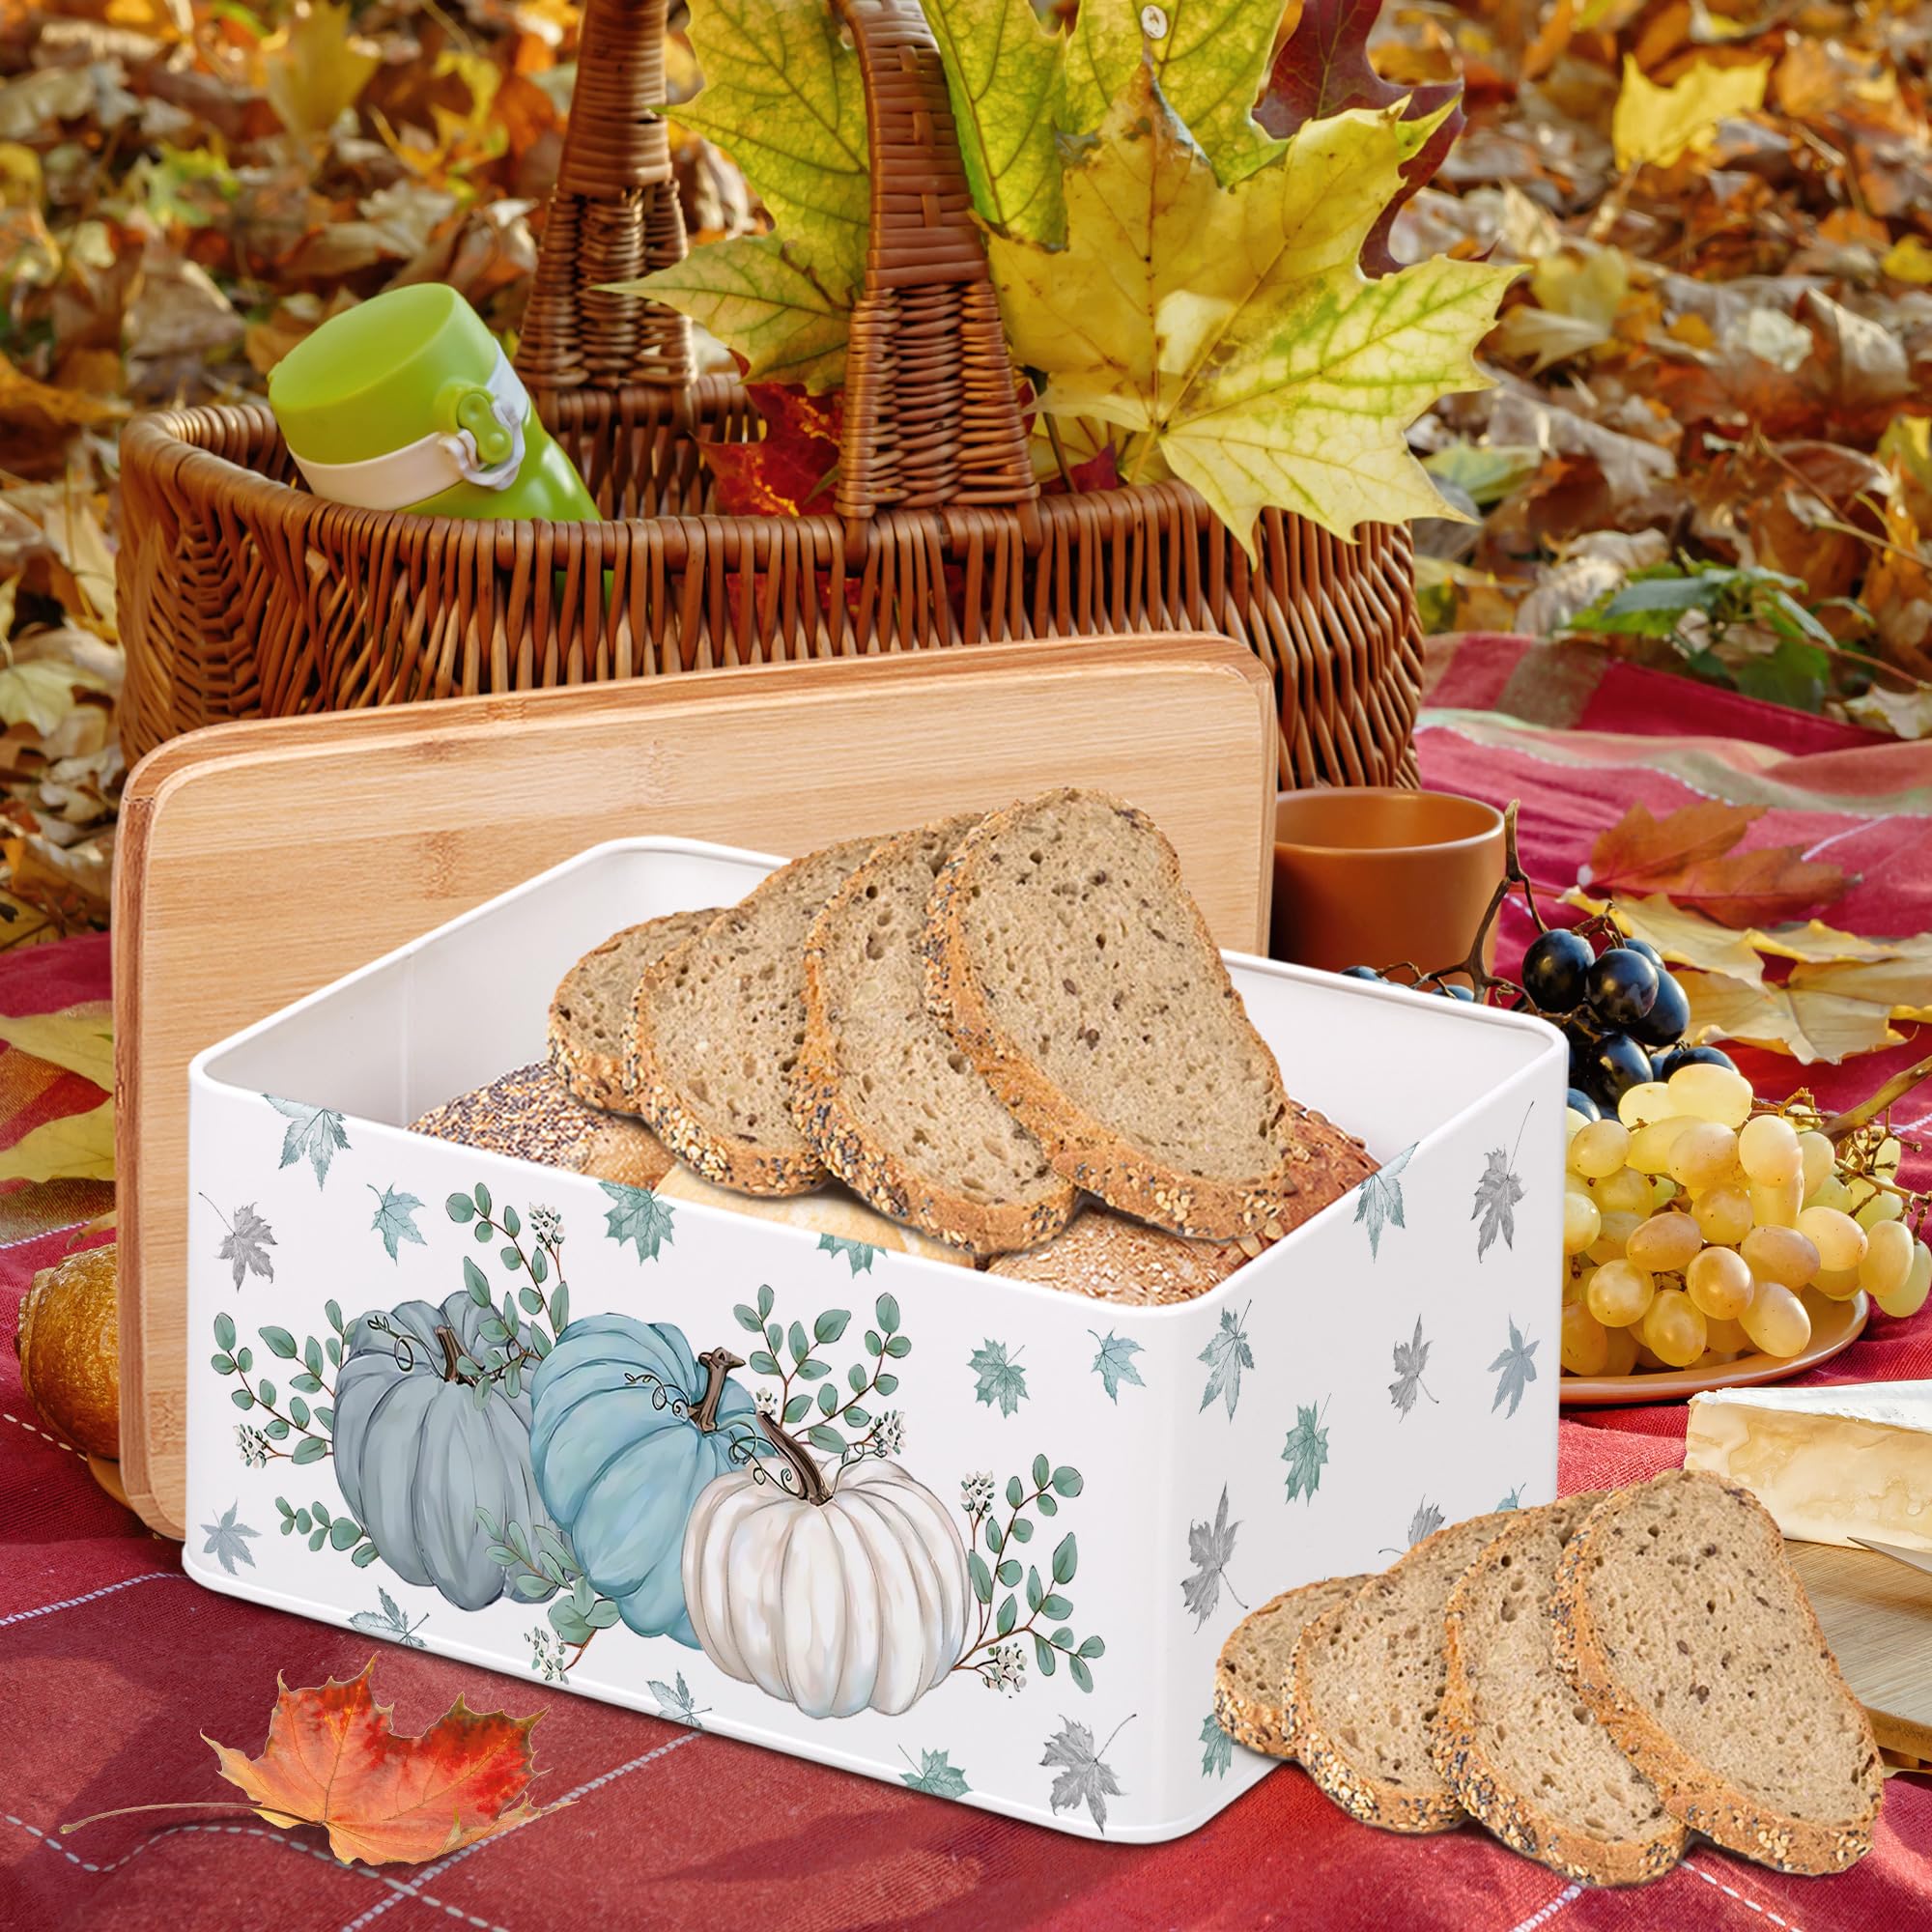 pinata fall bread box for fall decor, fall bread container with lid, pumpkin decor bread box for kitchen countertop for fall decorations, autumn home decor bread keeper (13 * 8.5 * 5.3 inch, white